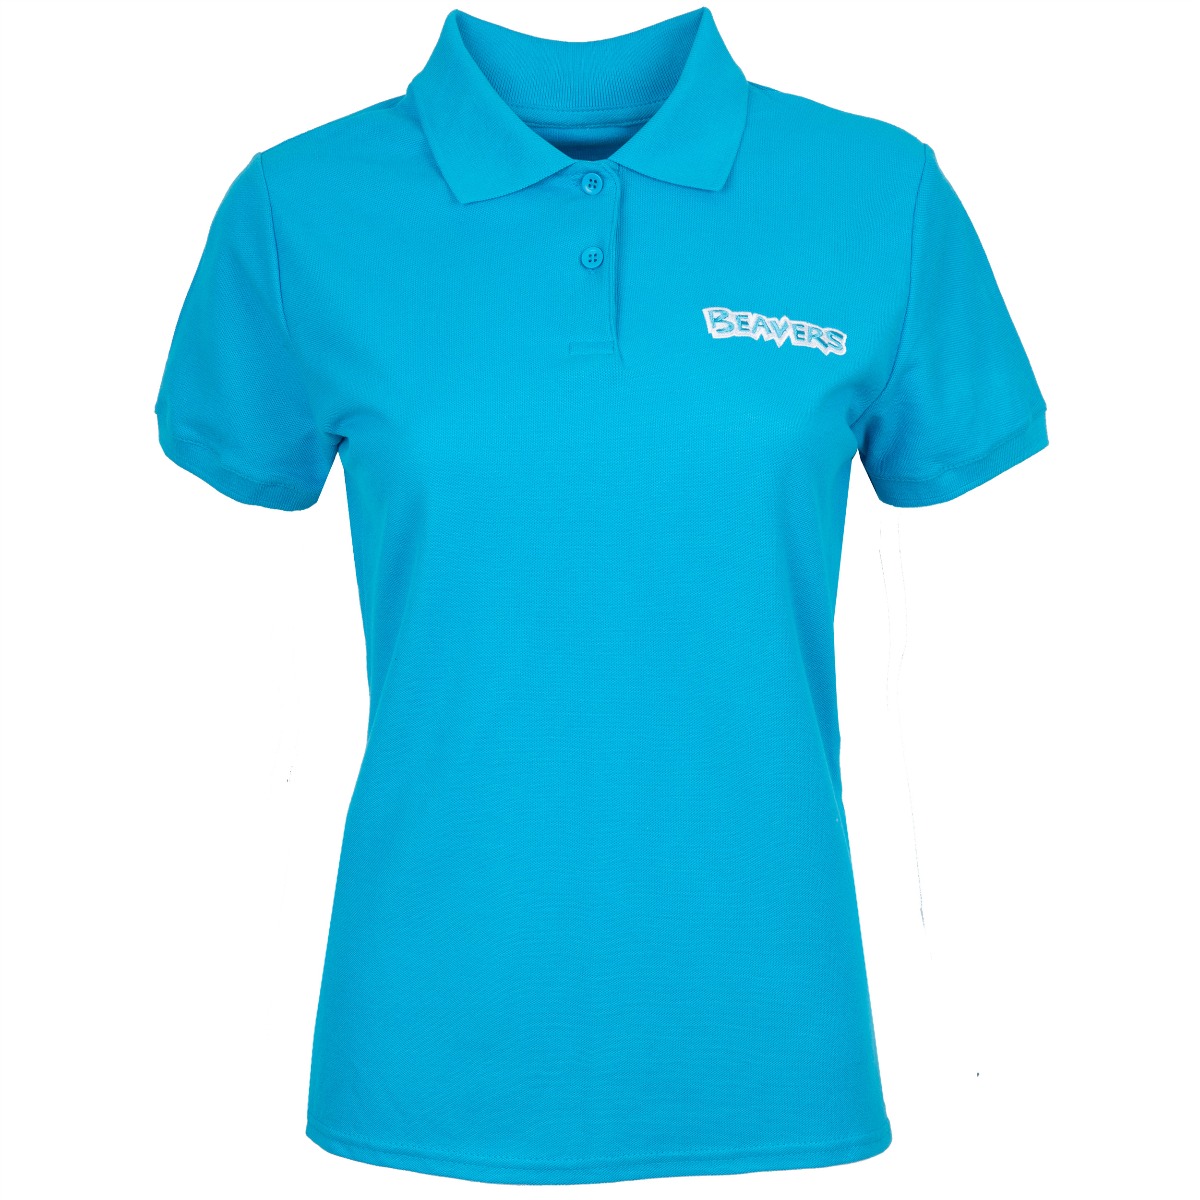 Beaver Scouts Ladies Turquoise Pique Polo Shirt 100% Cotton Outlet